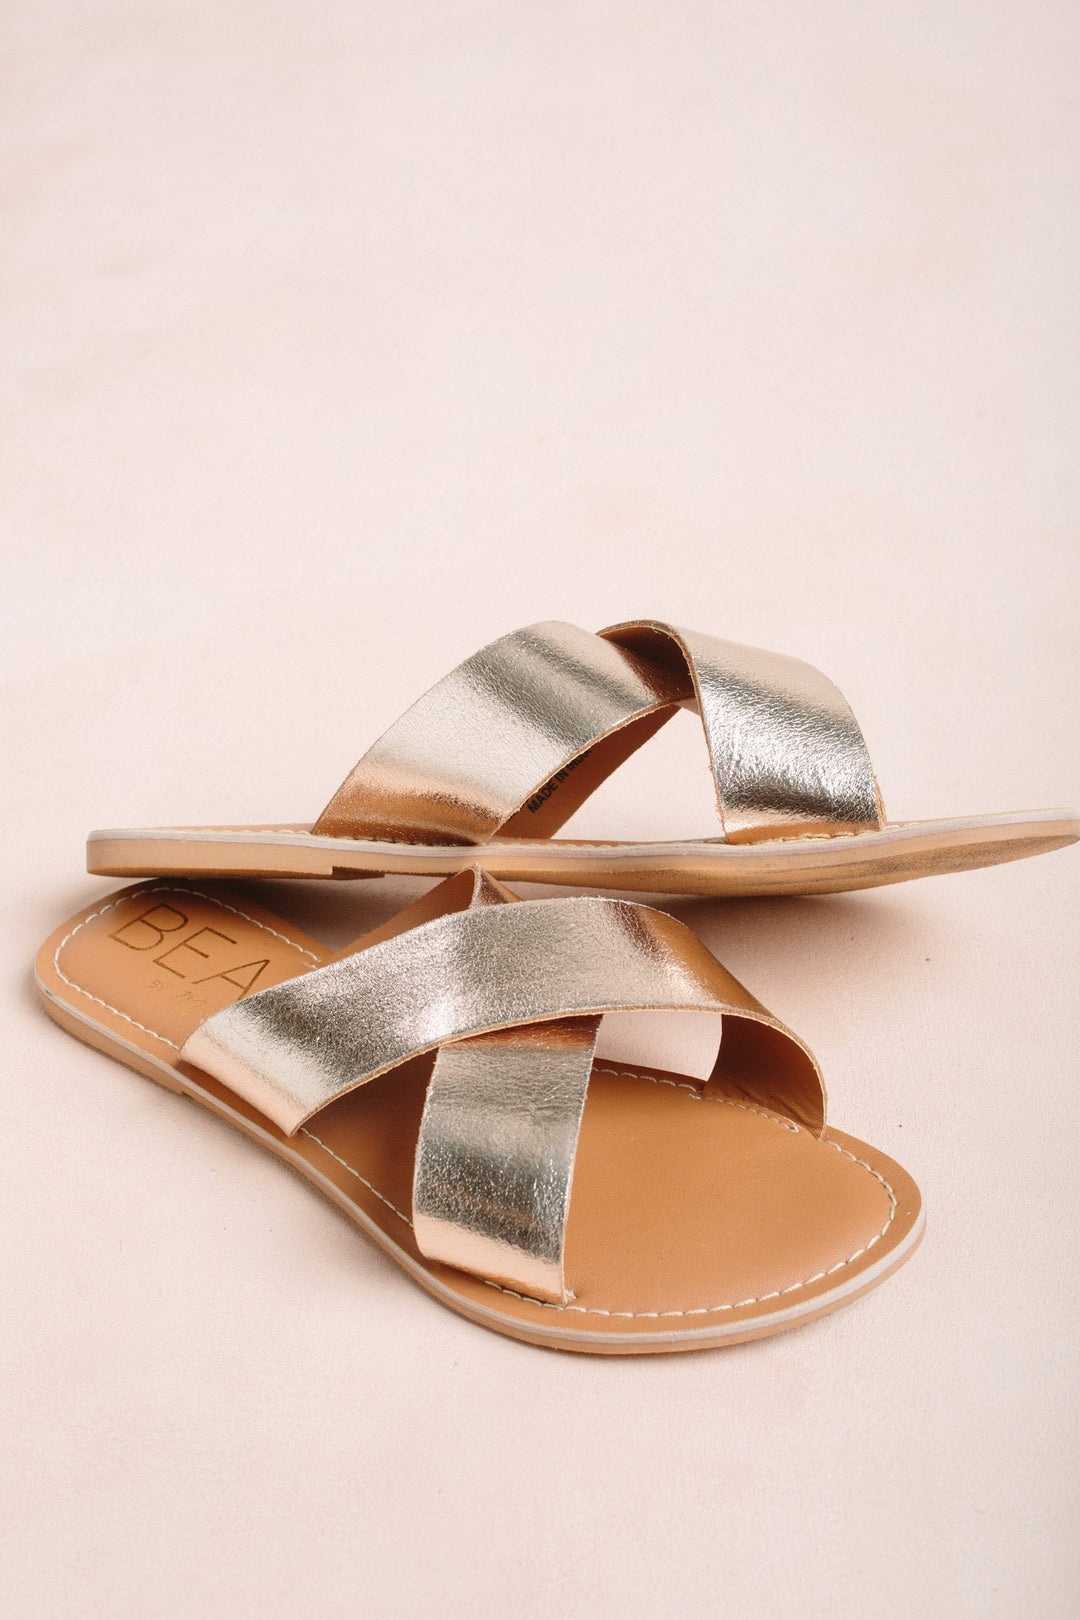 Matisse Pebble Sandals Shoes Morning Lavender Gold 6